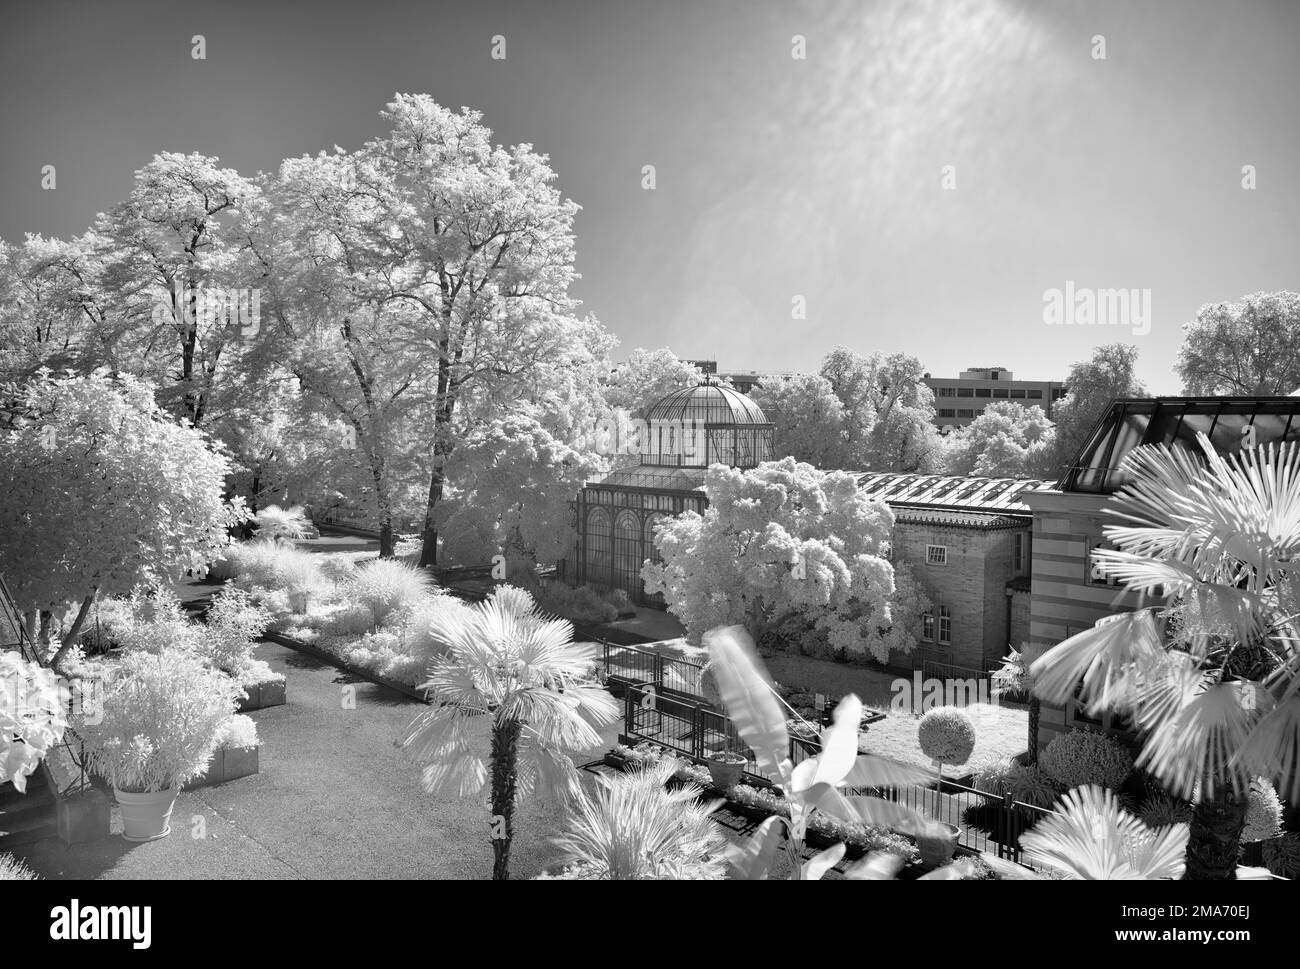 Greenhouse at the Moorish country house, infrared image, Zoological-Botanical Garden, Wilhelma, Stuttgart, Baden-Wuerttemberg, Germany Stock Photo